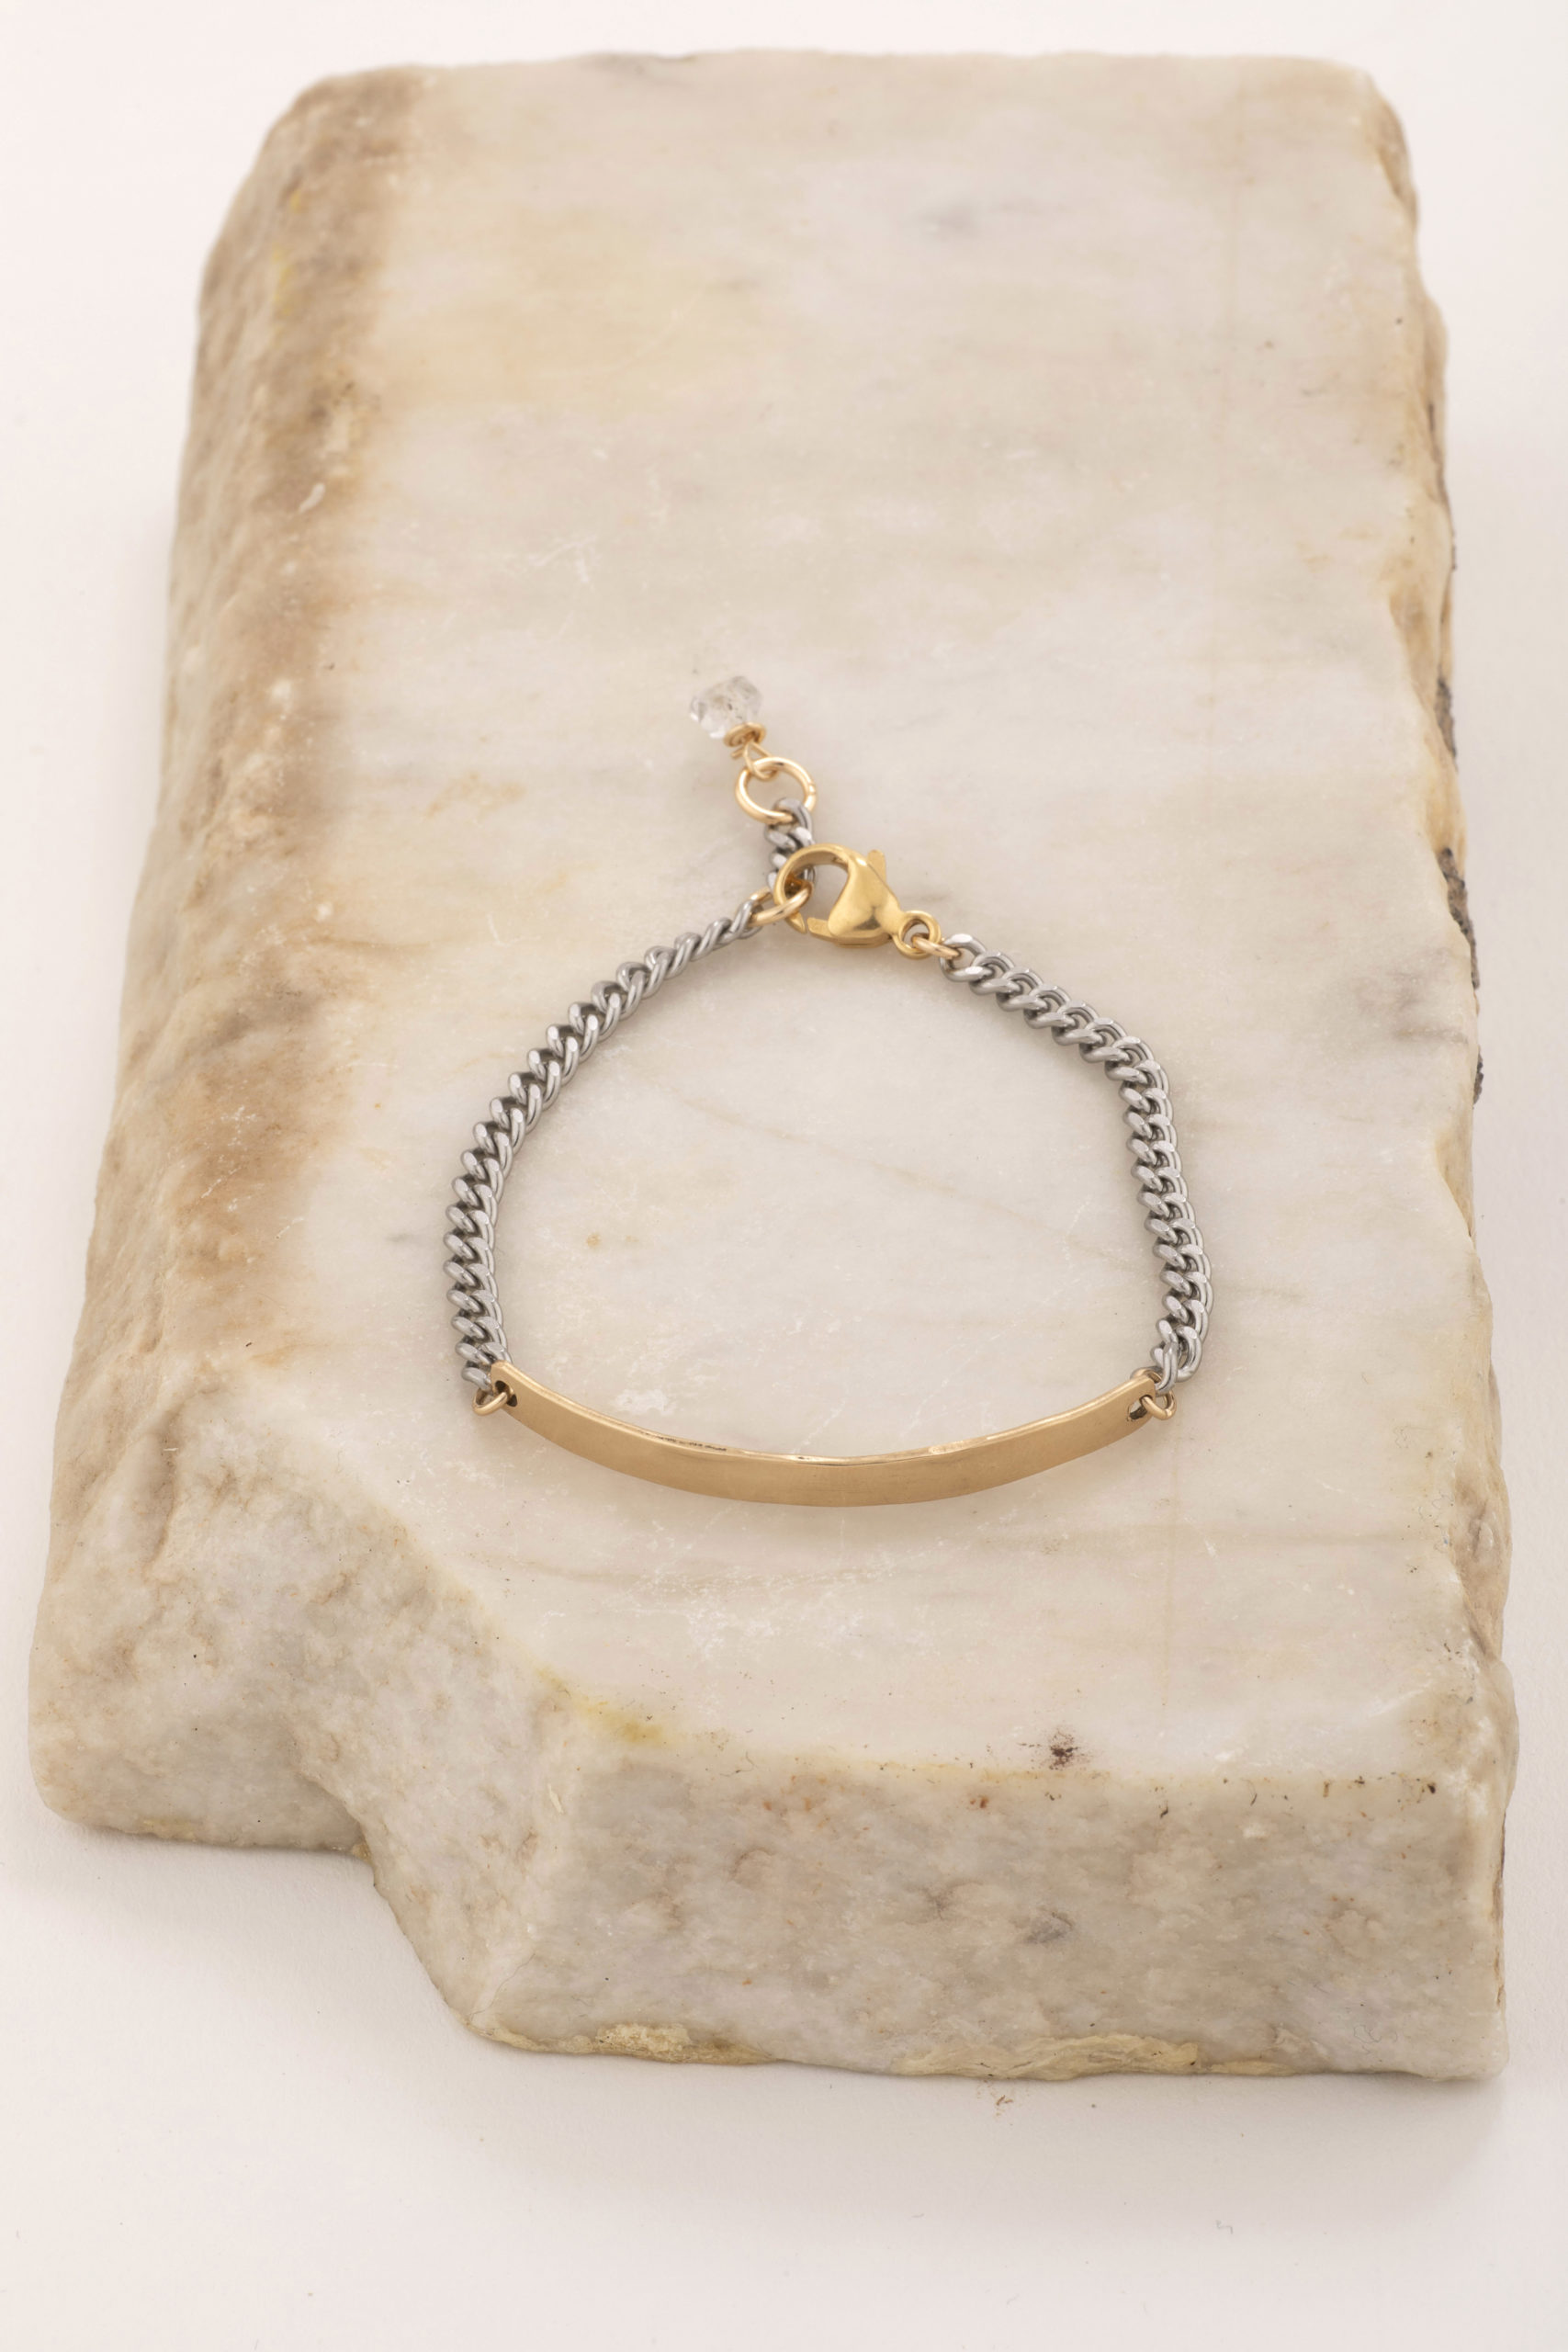 Featured image for “Farrah Silver Bracelet”